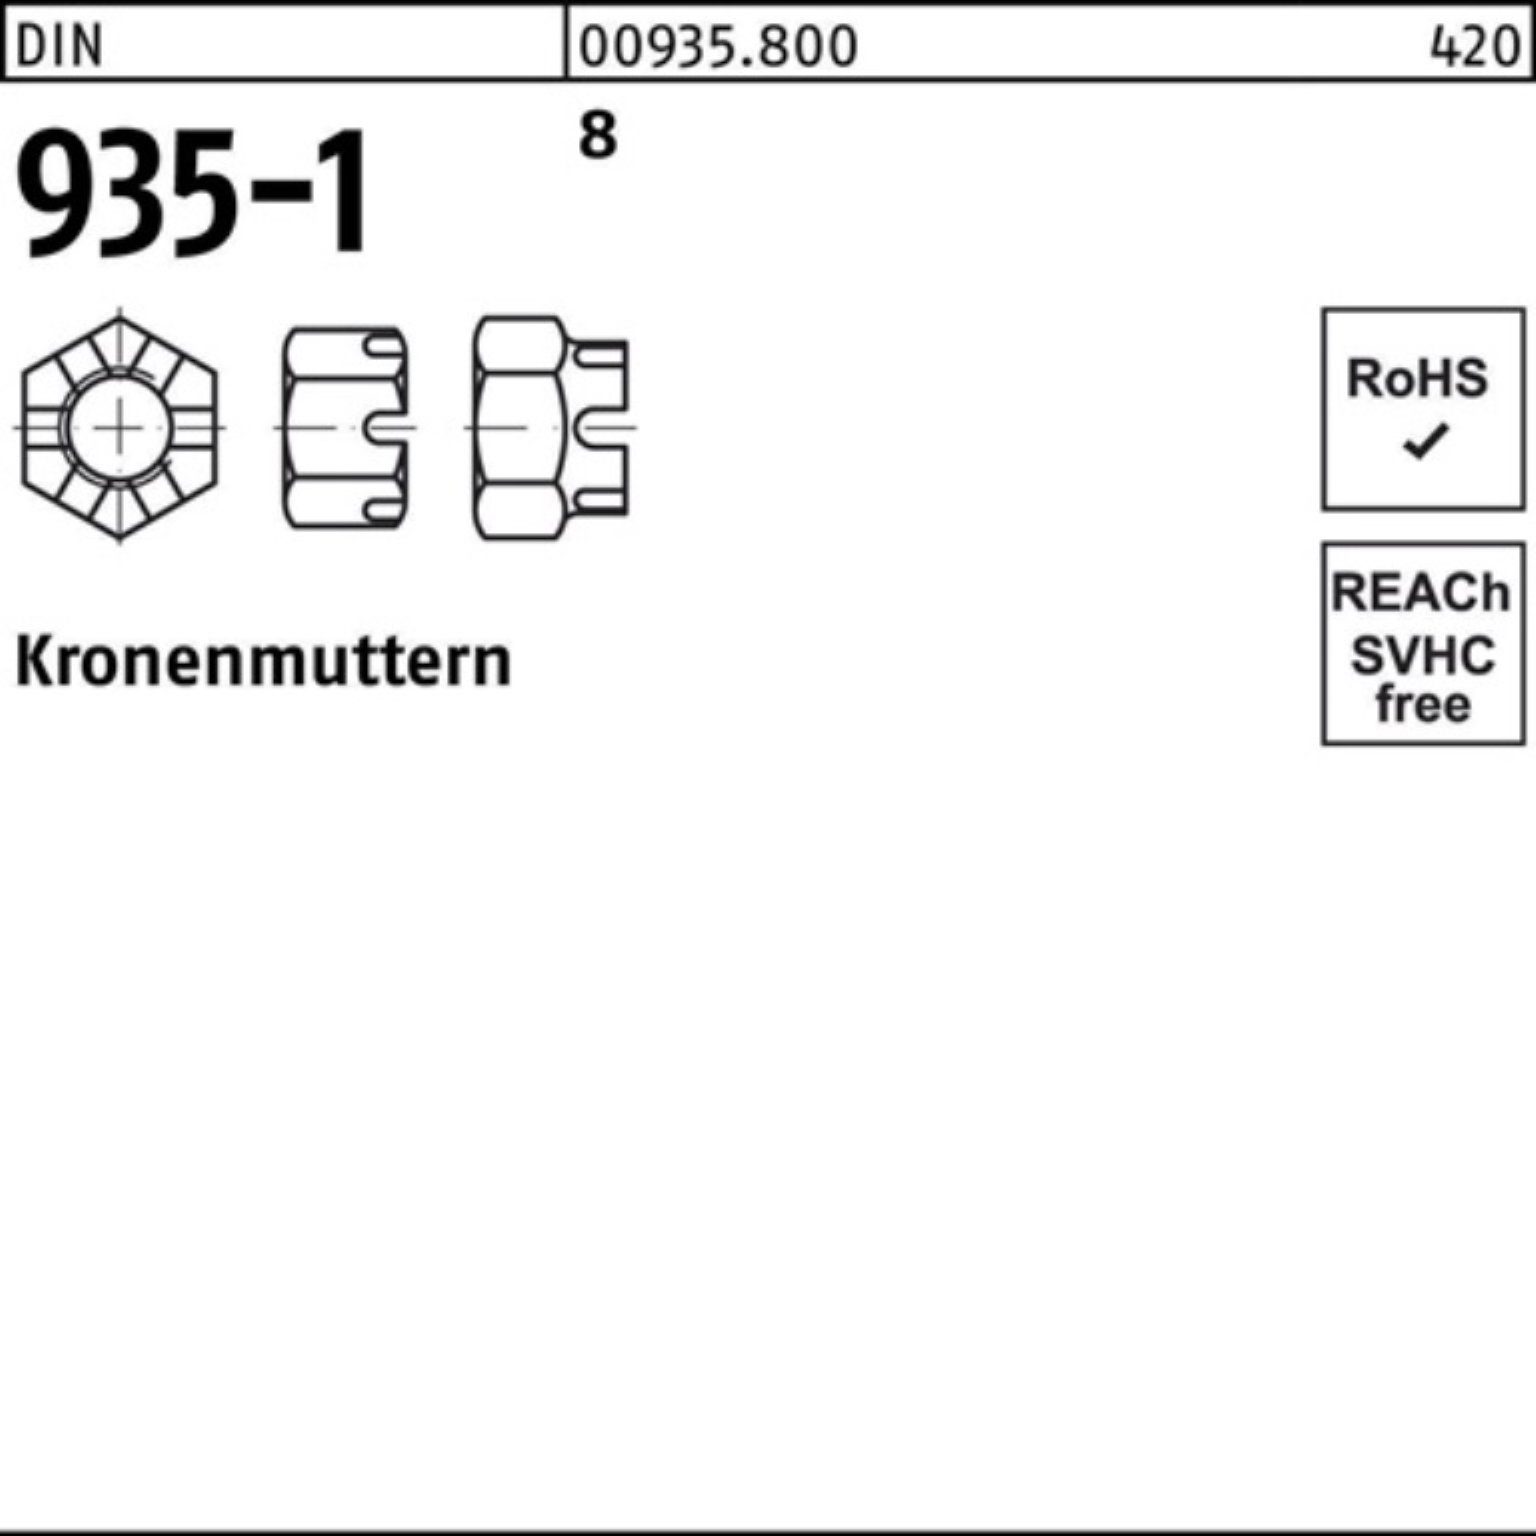 Reyher Kronenmutter 100er Pack Kronenmutter DIN 935-1 M48 8 1 Stück DIN 935-1 8 Kronenmut